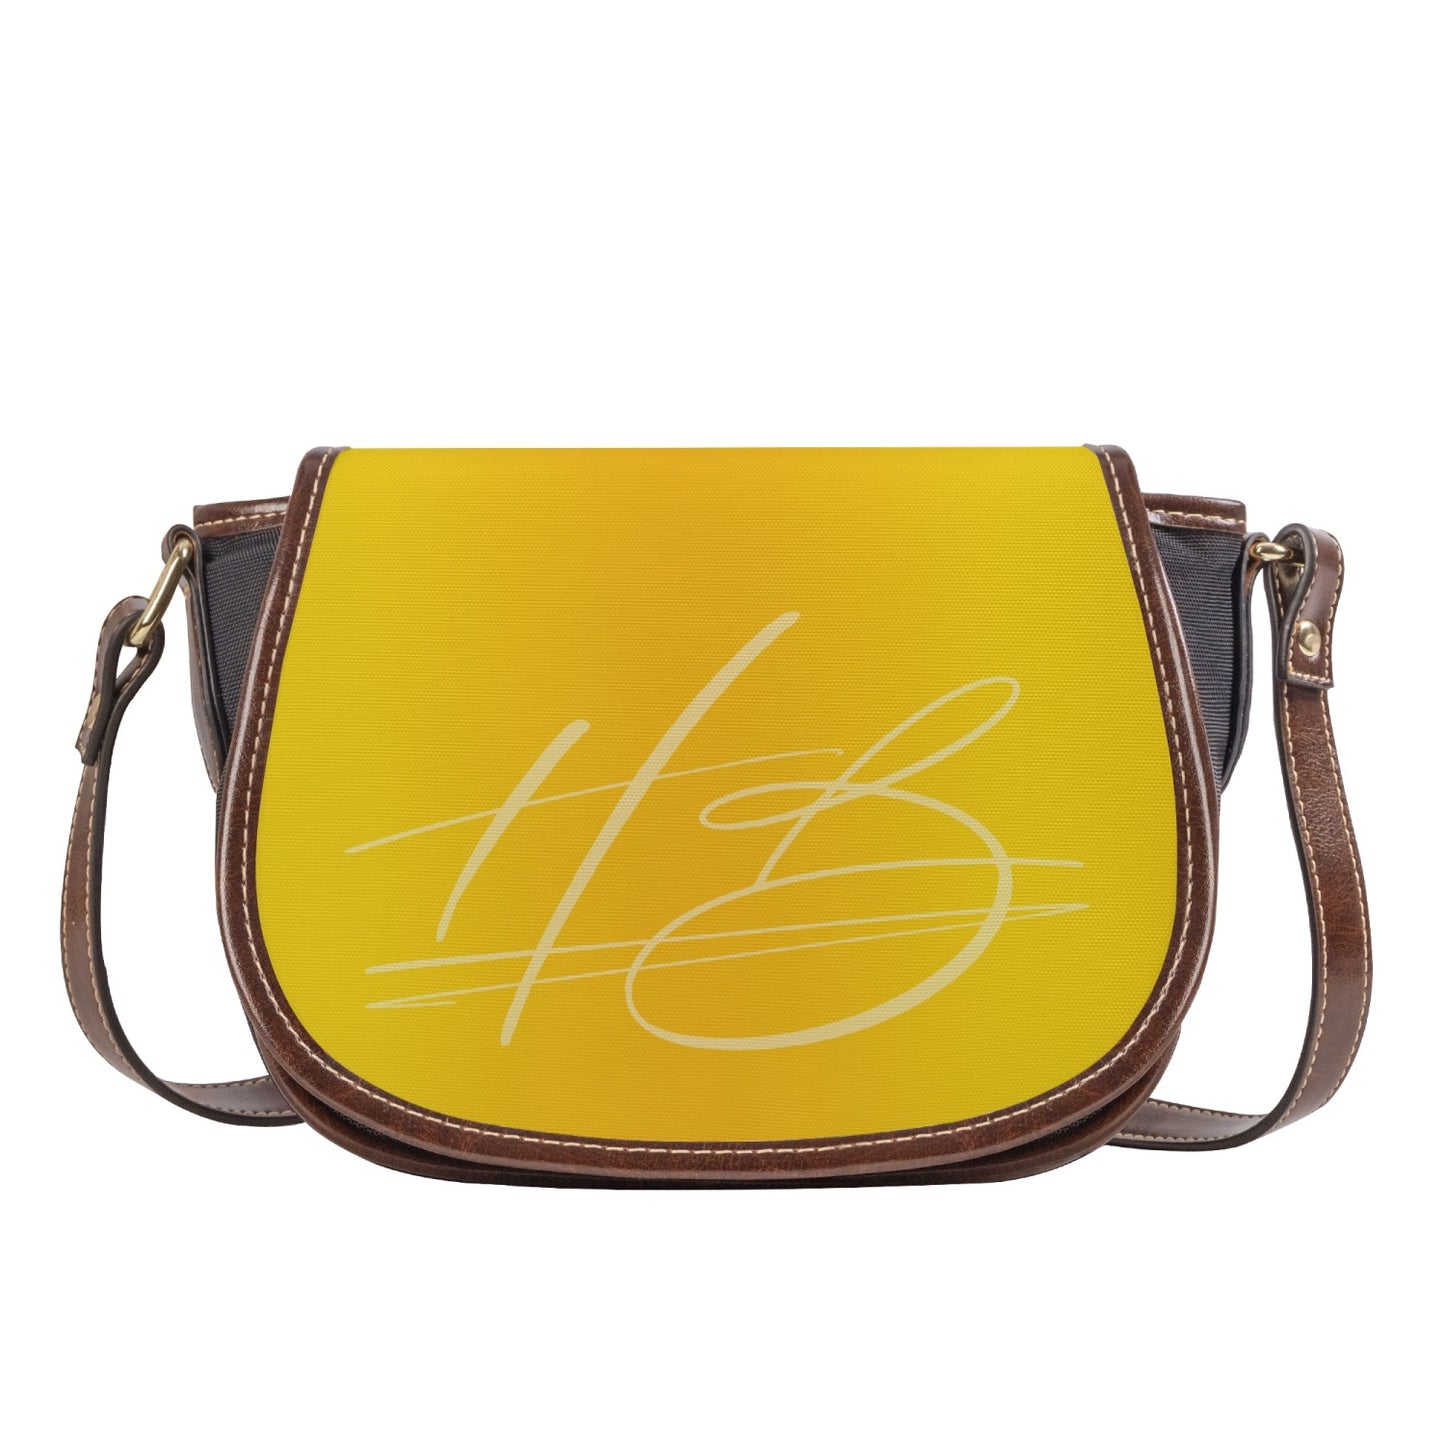 HB Vegan Leather Flap Saddle Bag - Gold